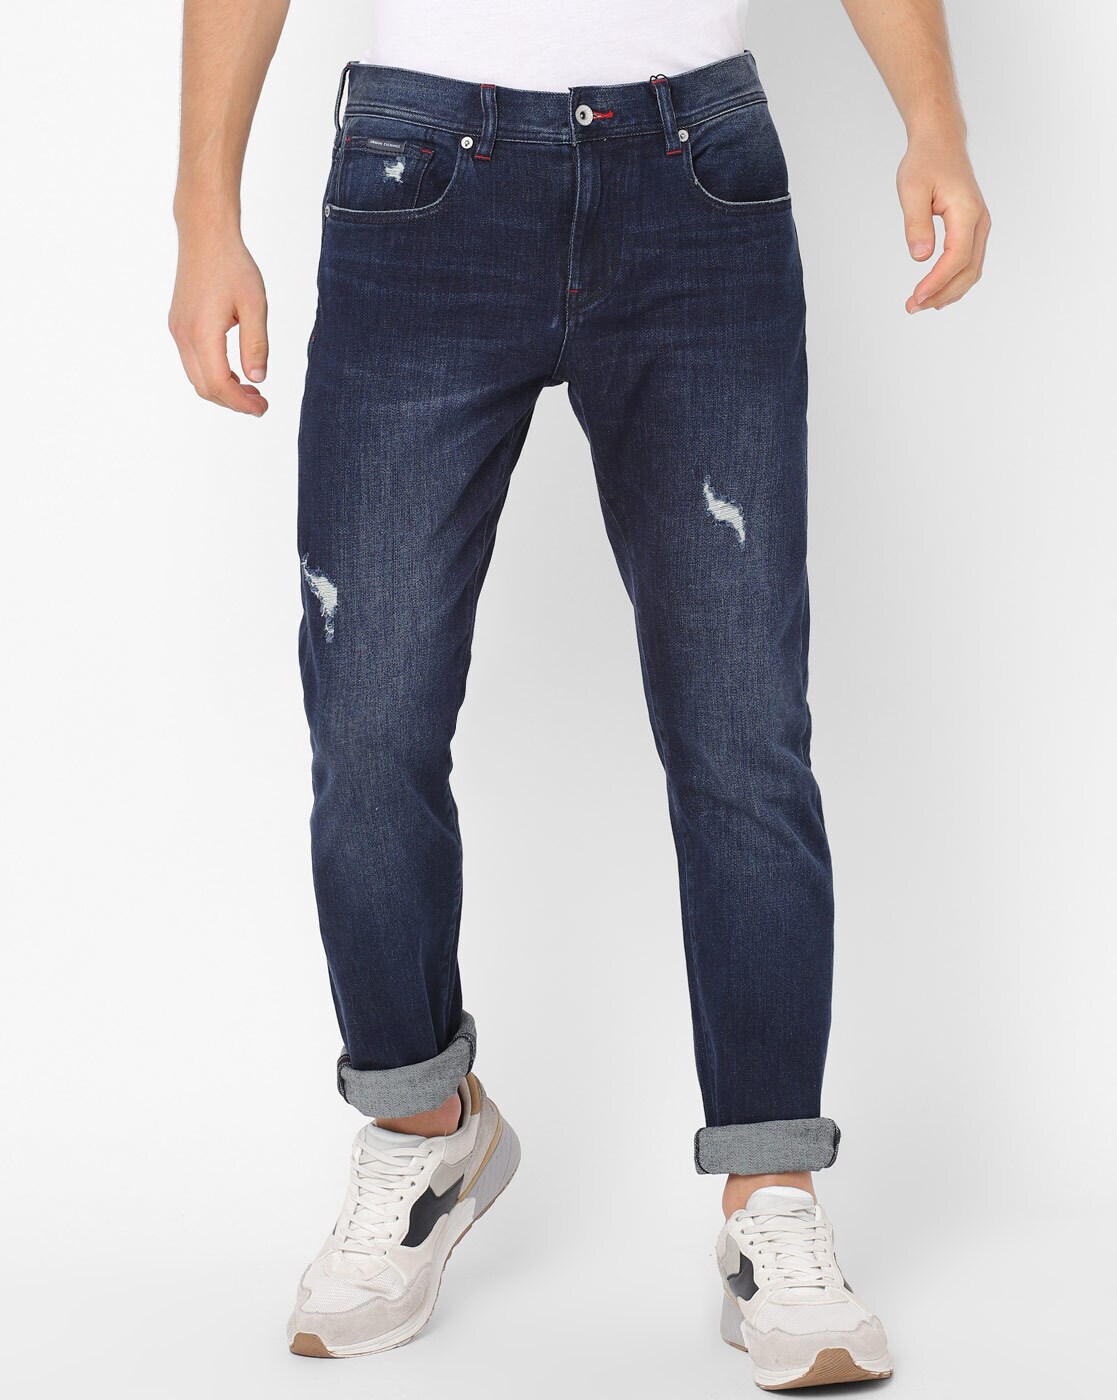 Buy SINAN Boys Jeans 211 Denim Full Pant (26) at Amazon.in